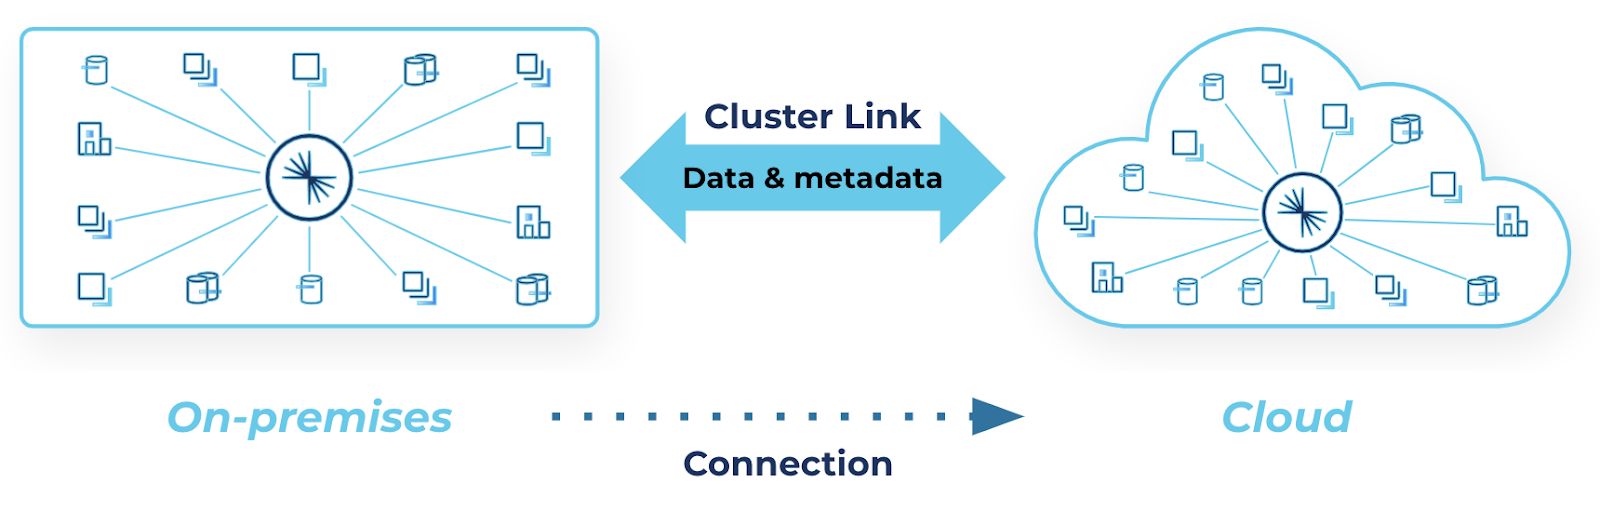 Cluster link hybrid data bridge between on-premises and the cloud